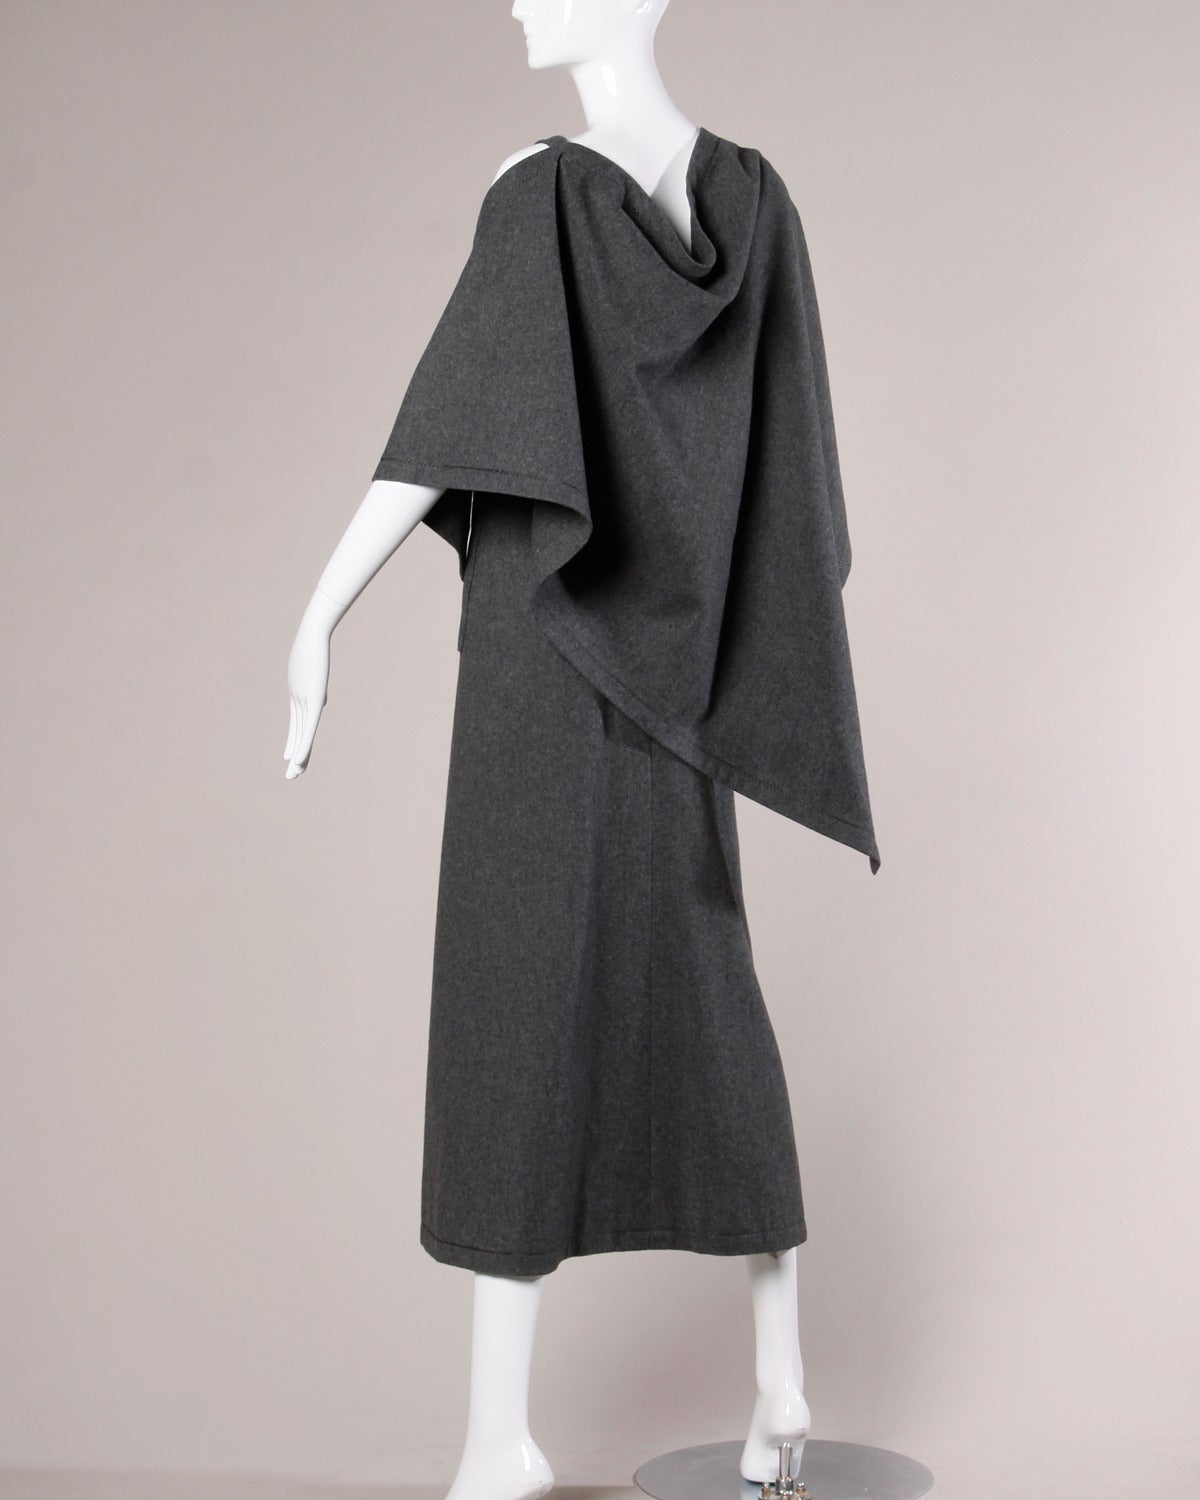 Jean Patou Vintage 1960s Wool 3-Piece Belt, Wrap & Dress Ensemble For Sale 3